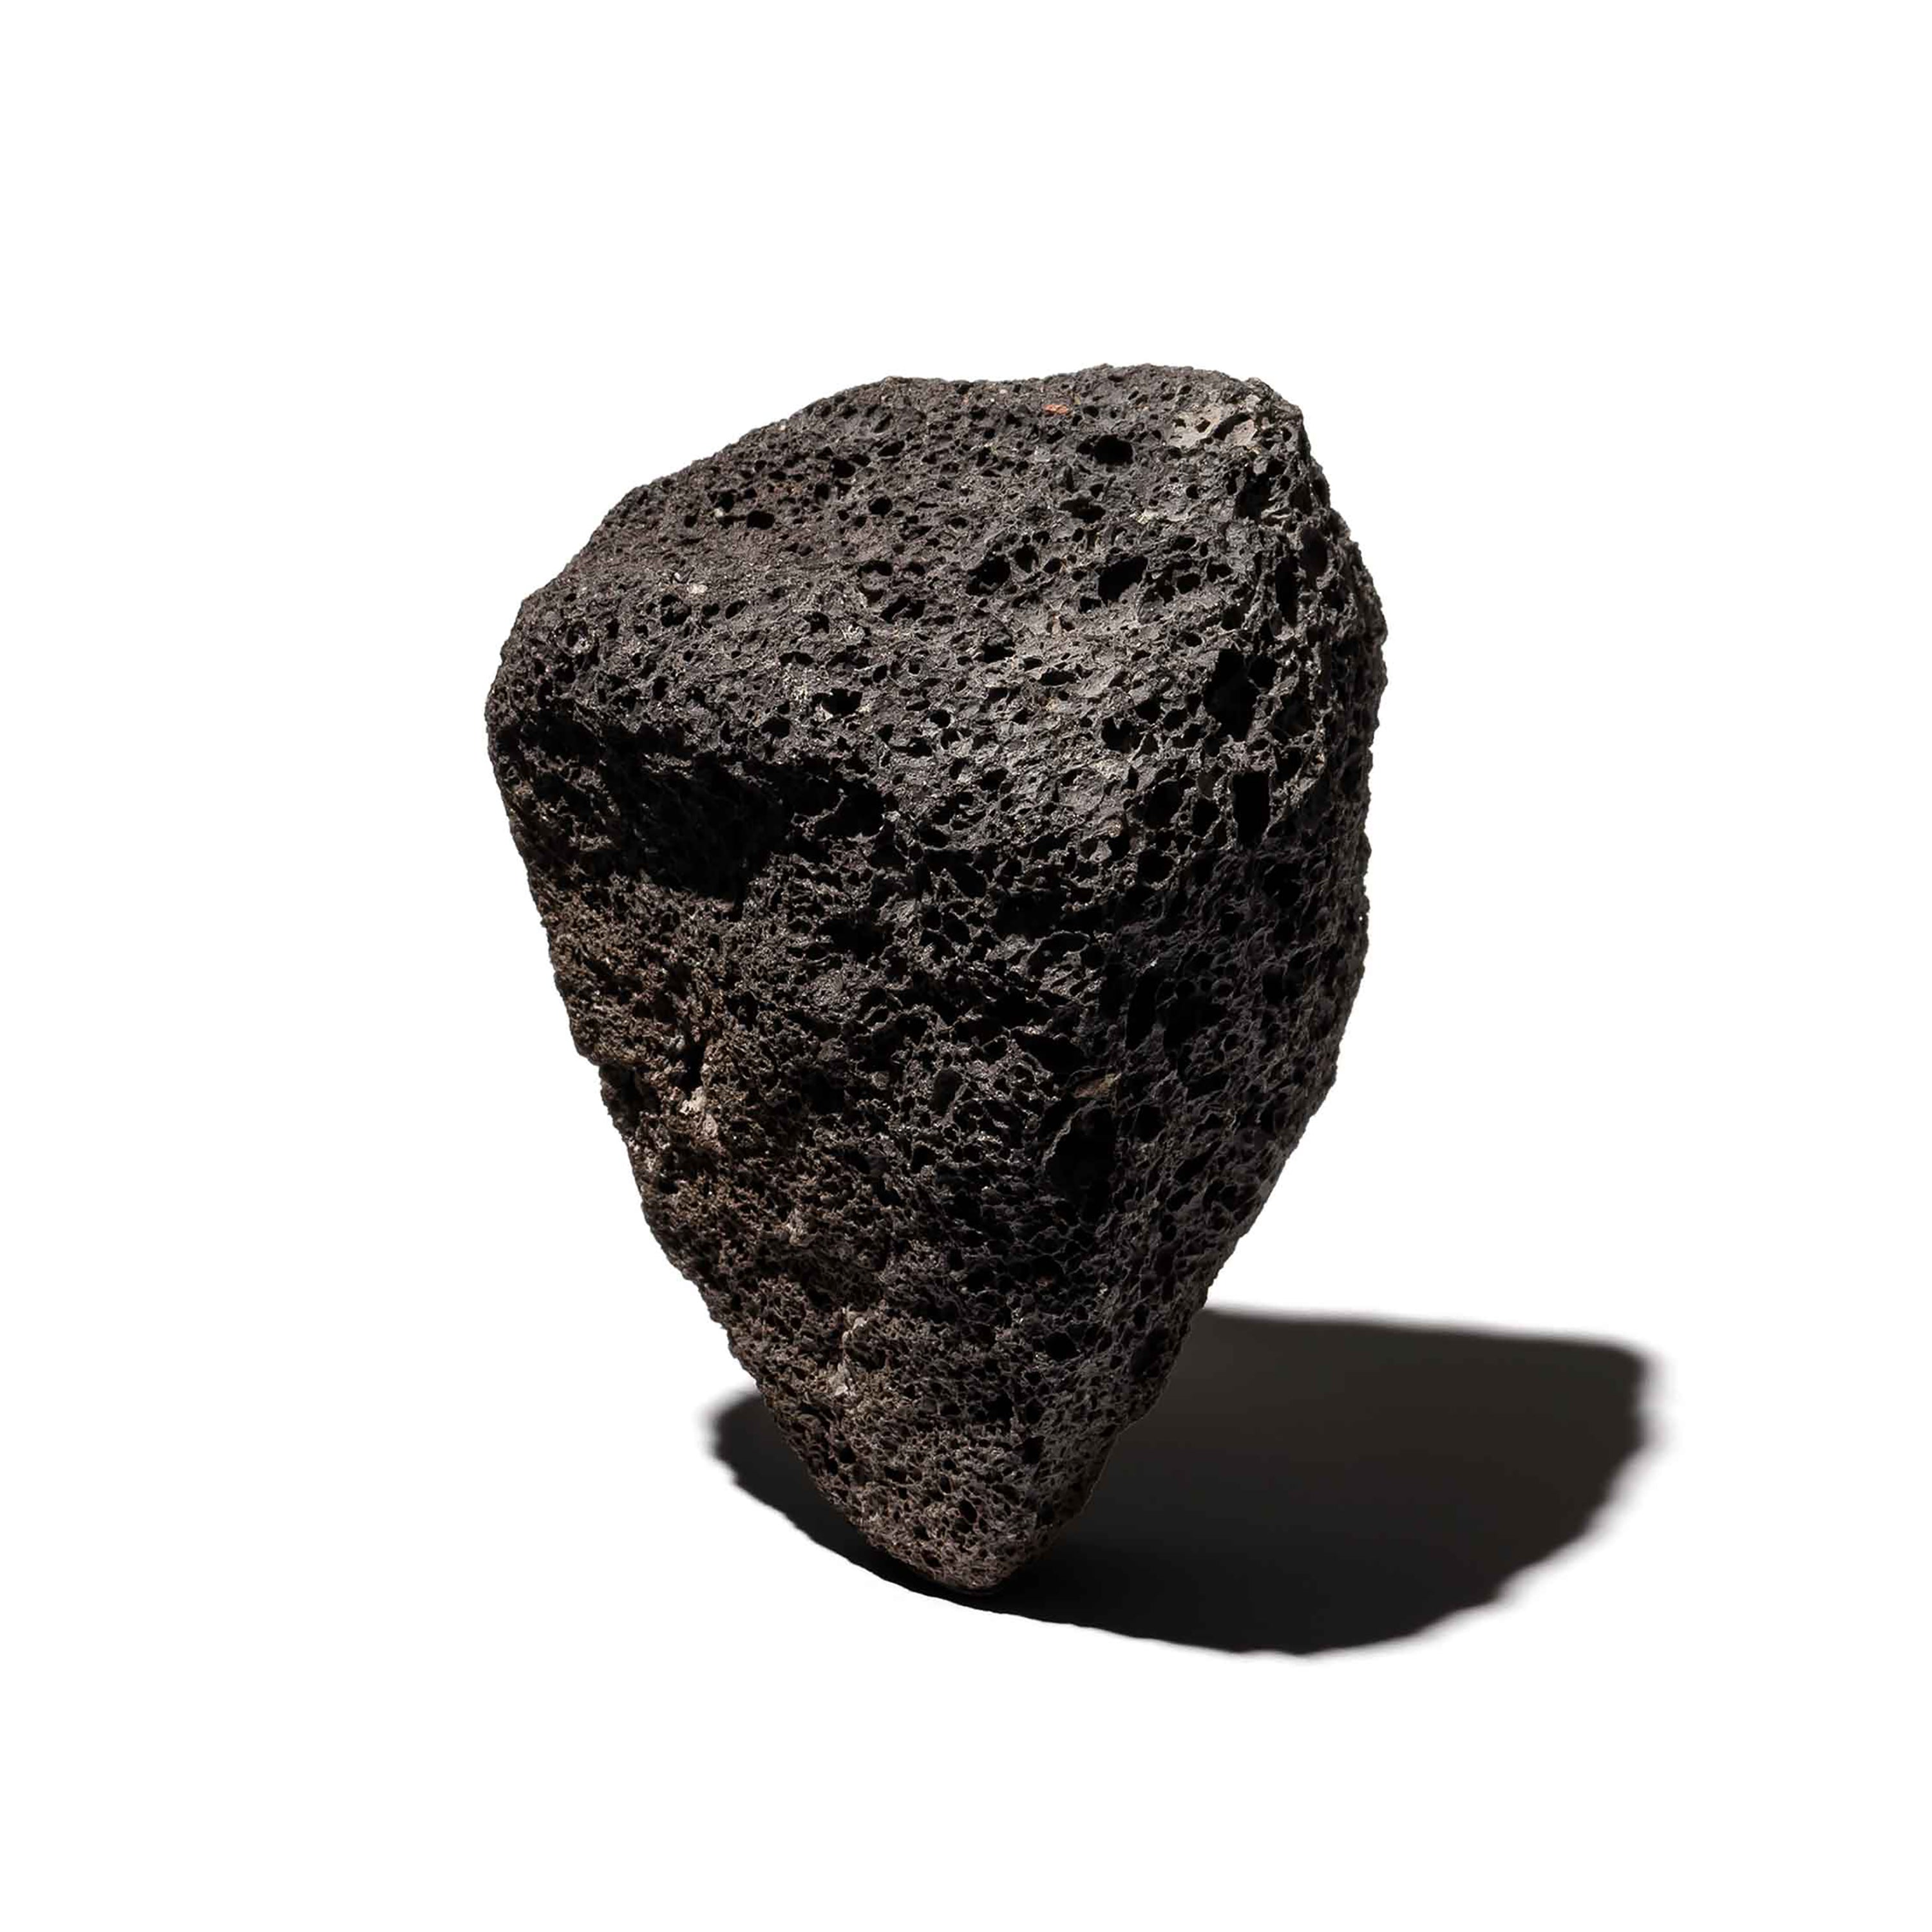 Volcanic pumice stone